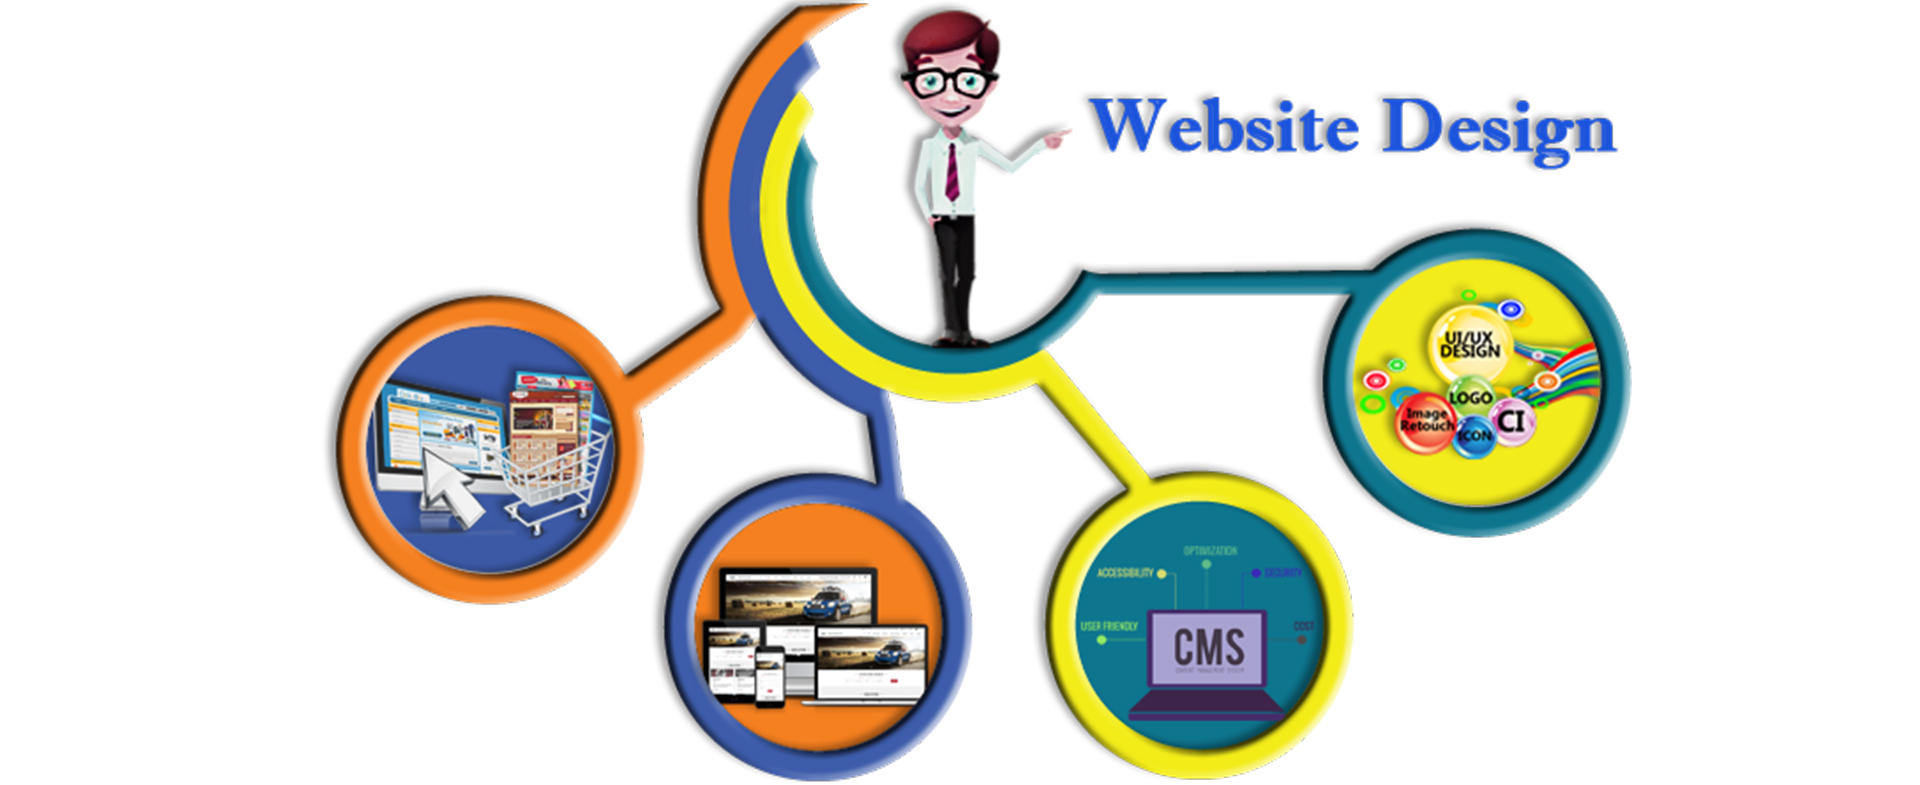 Website Design Services Company